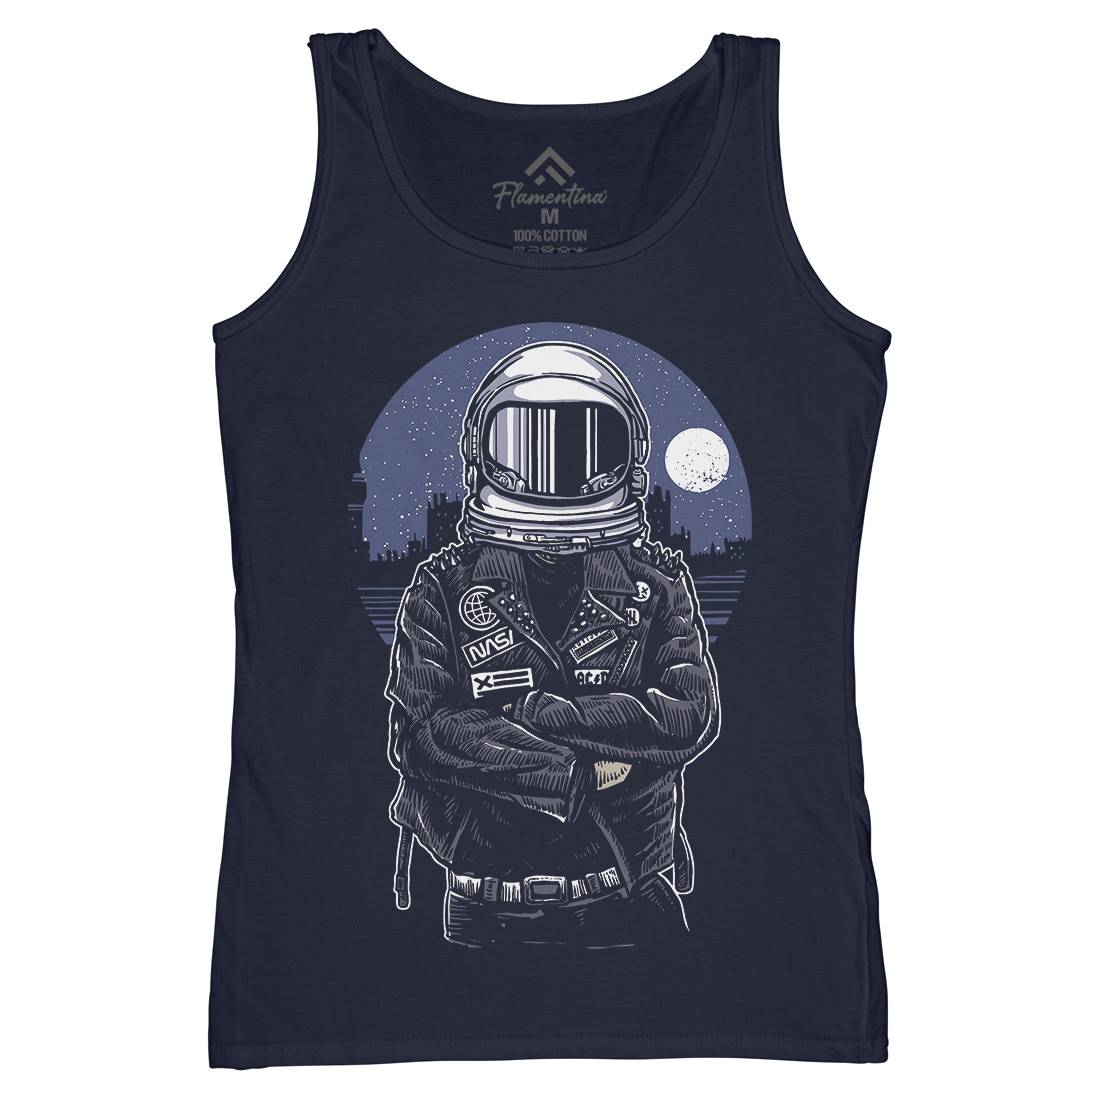 Astronaut Rebel Womens Organic Tank Top Vest Space A508